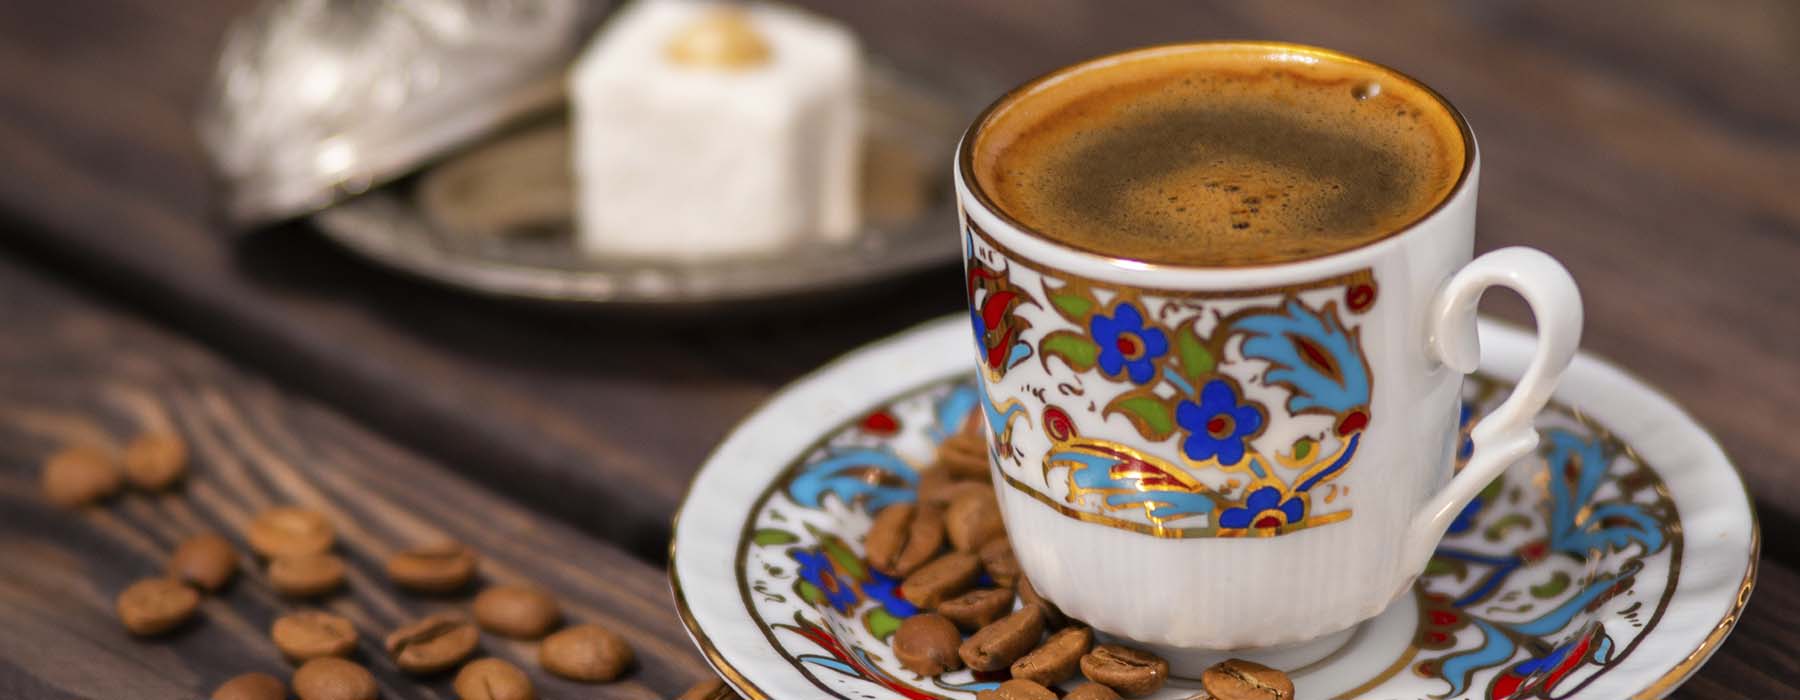 EspressoWorks Blog - 8 Sugar Alternatives for Coffee You Didn’t Know Existed - Turkish Coffee